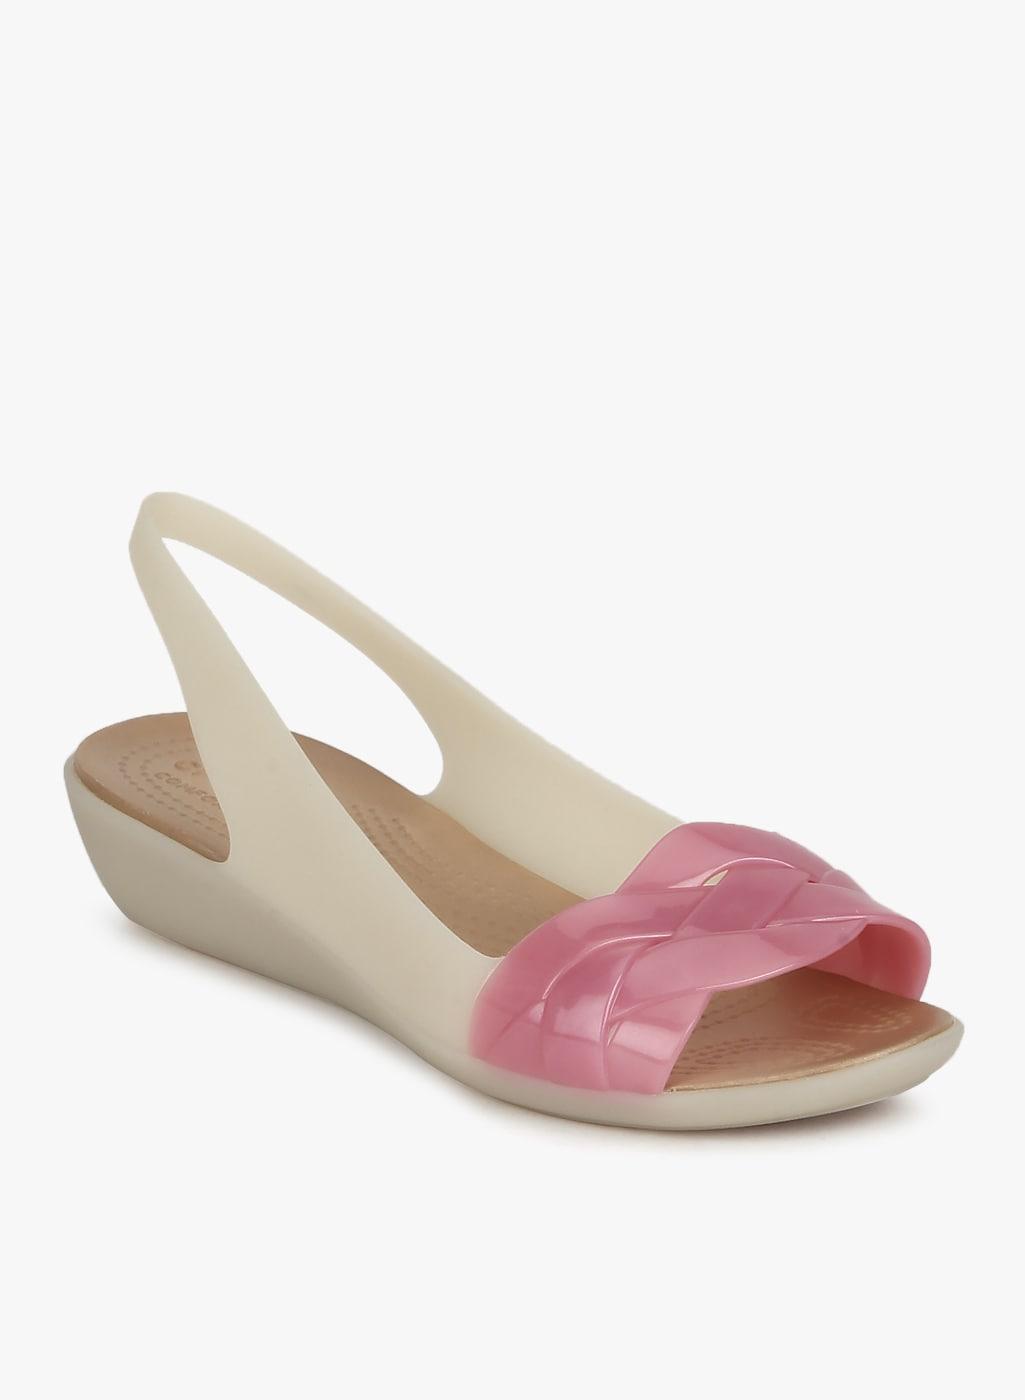 crocs women off-white & pink colourblocked open toe flats